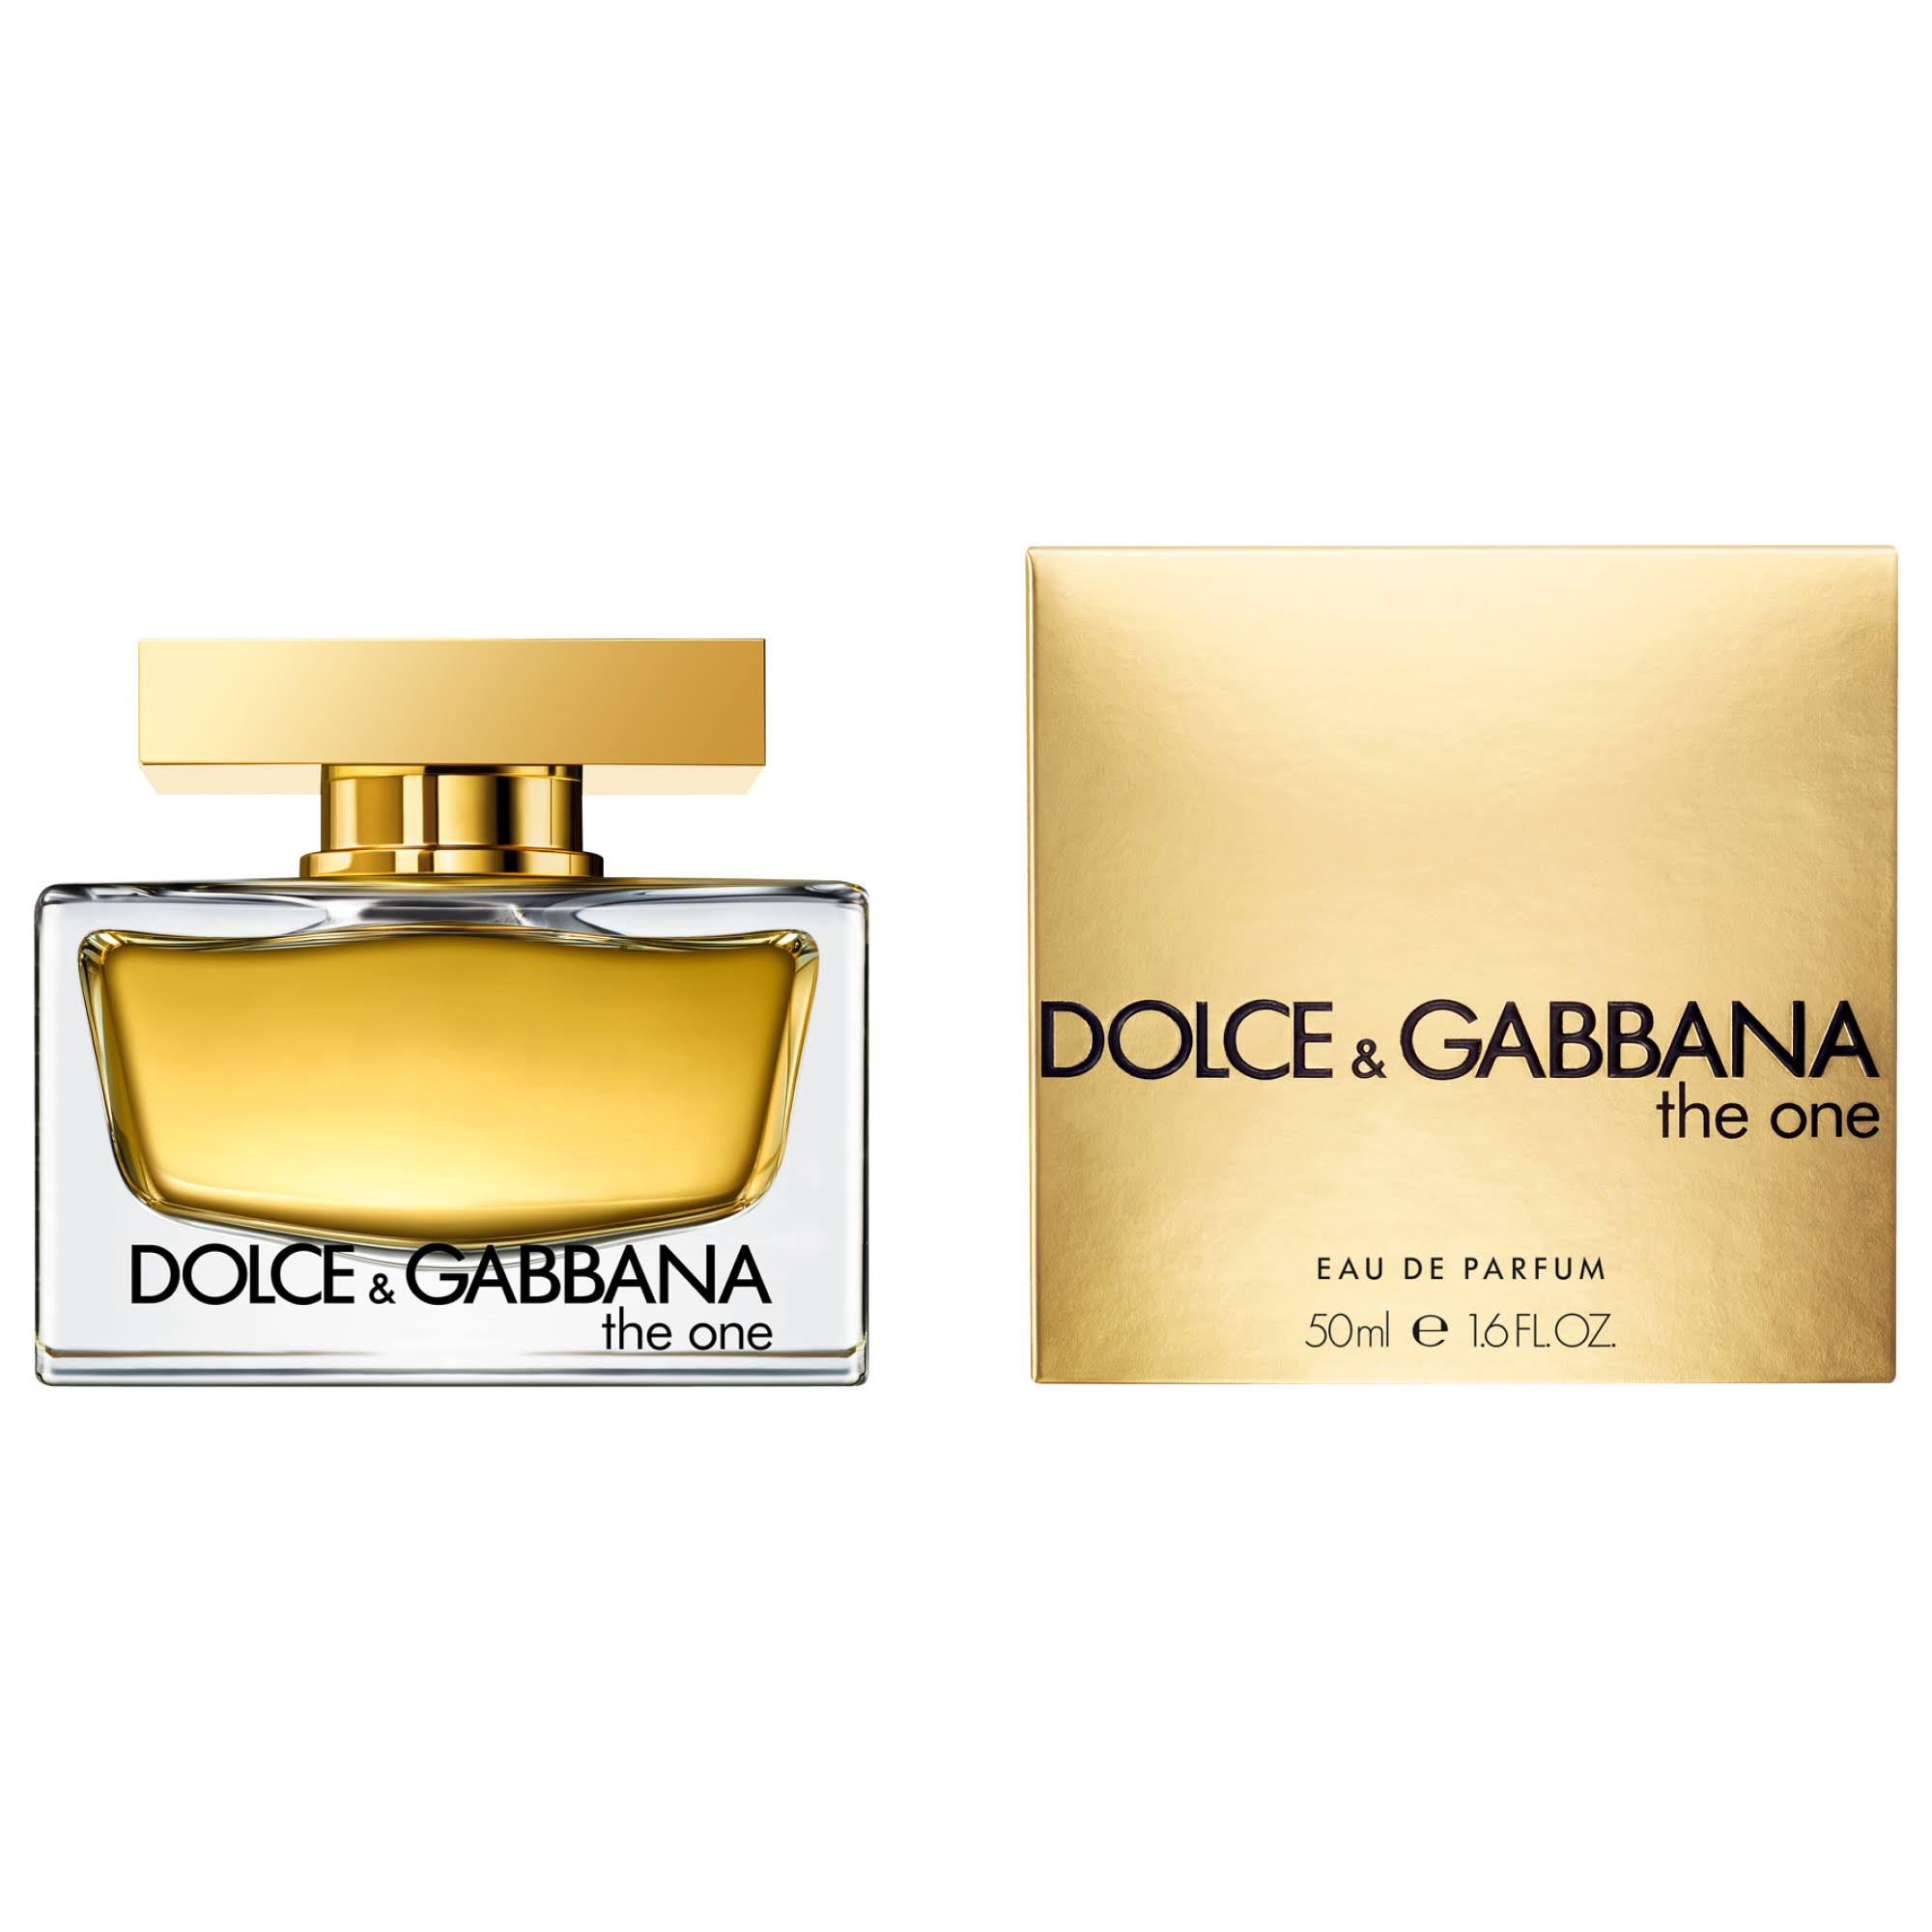 Dolce & Gabbana The One Women's Eau de Parfum - 50ml